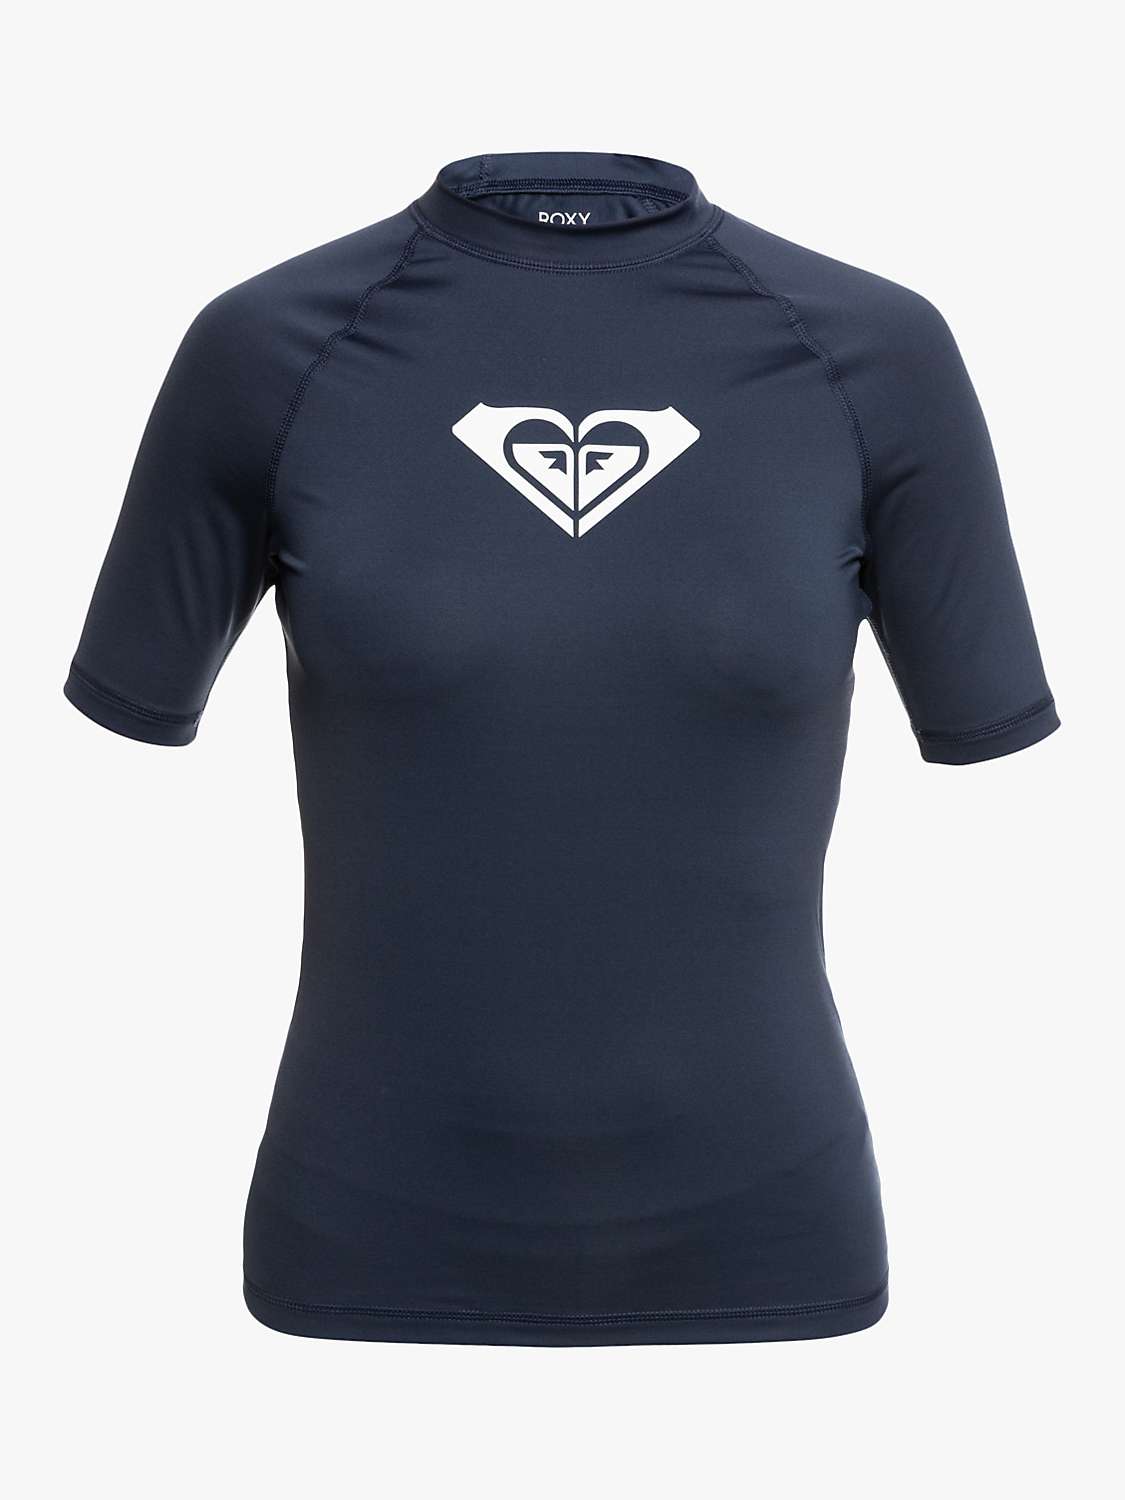 Buy Roxy Short Sleeve Rash Vest, Navy Online at johnlewis.com